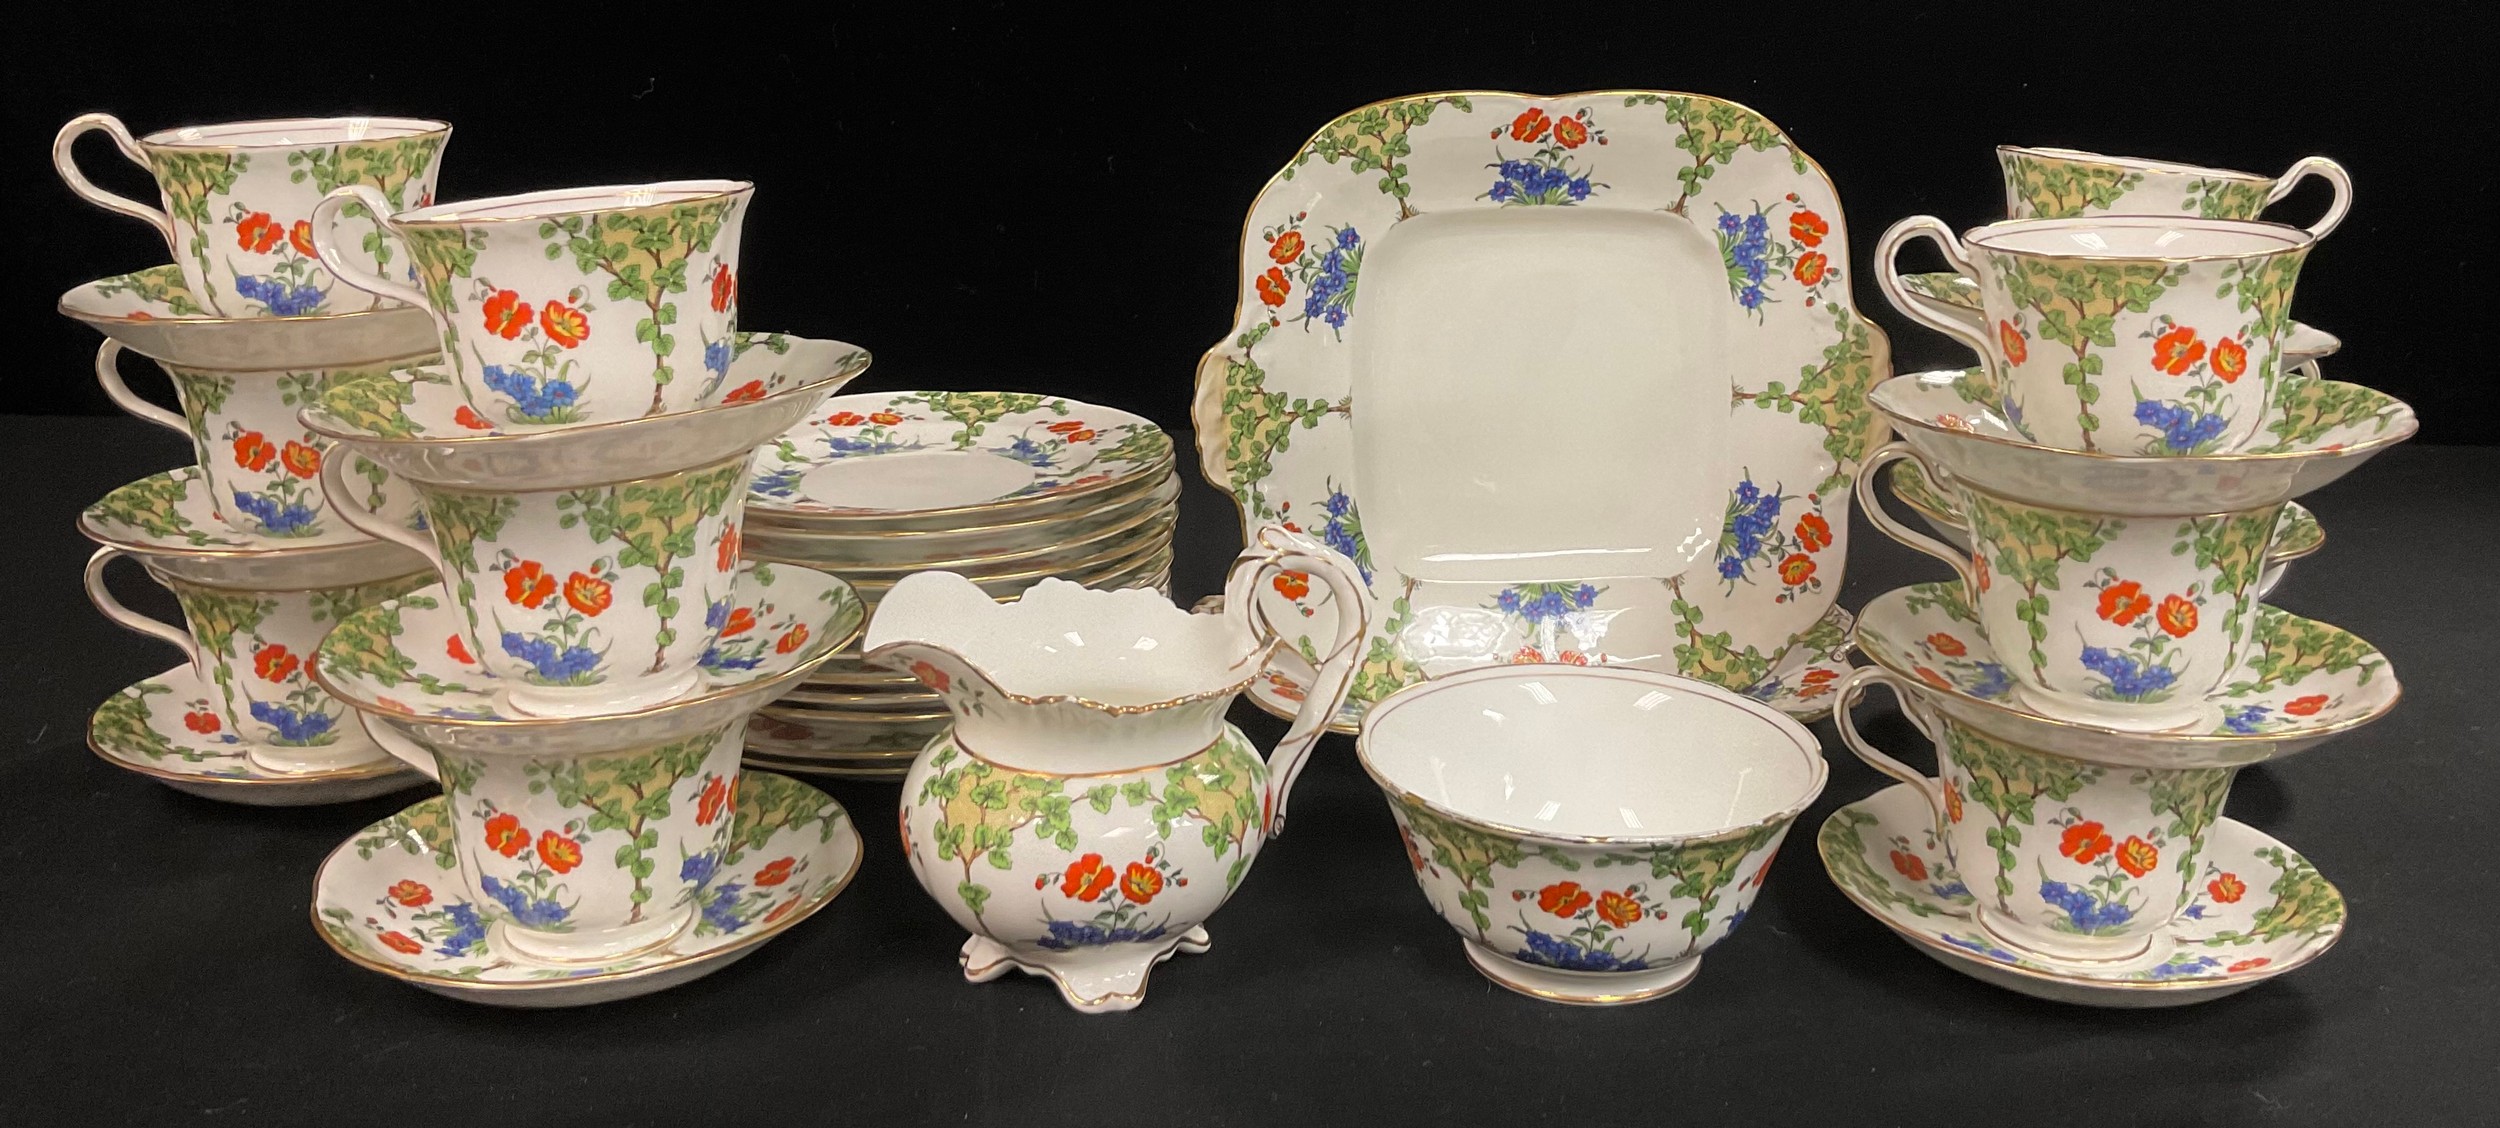 An early 20th century Aynsley tea set, comprising twelve teacups, saucers and tea plates, pair of